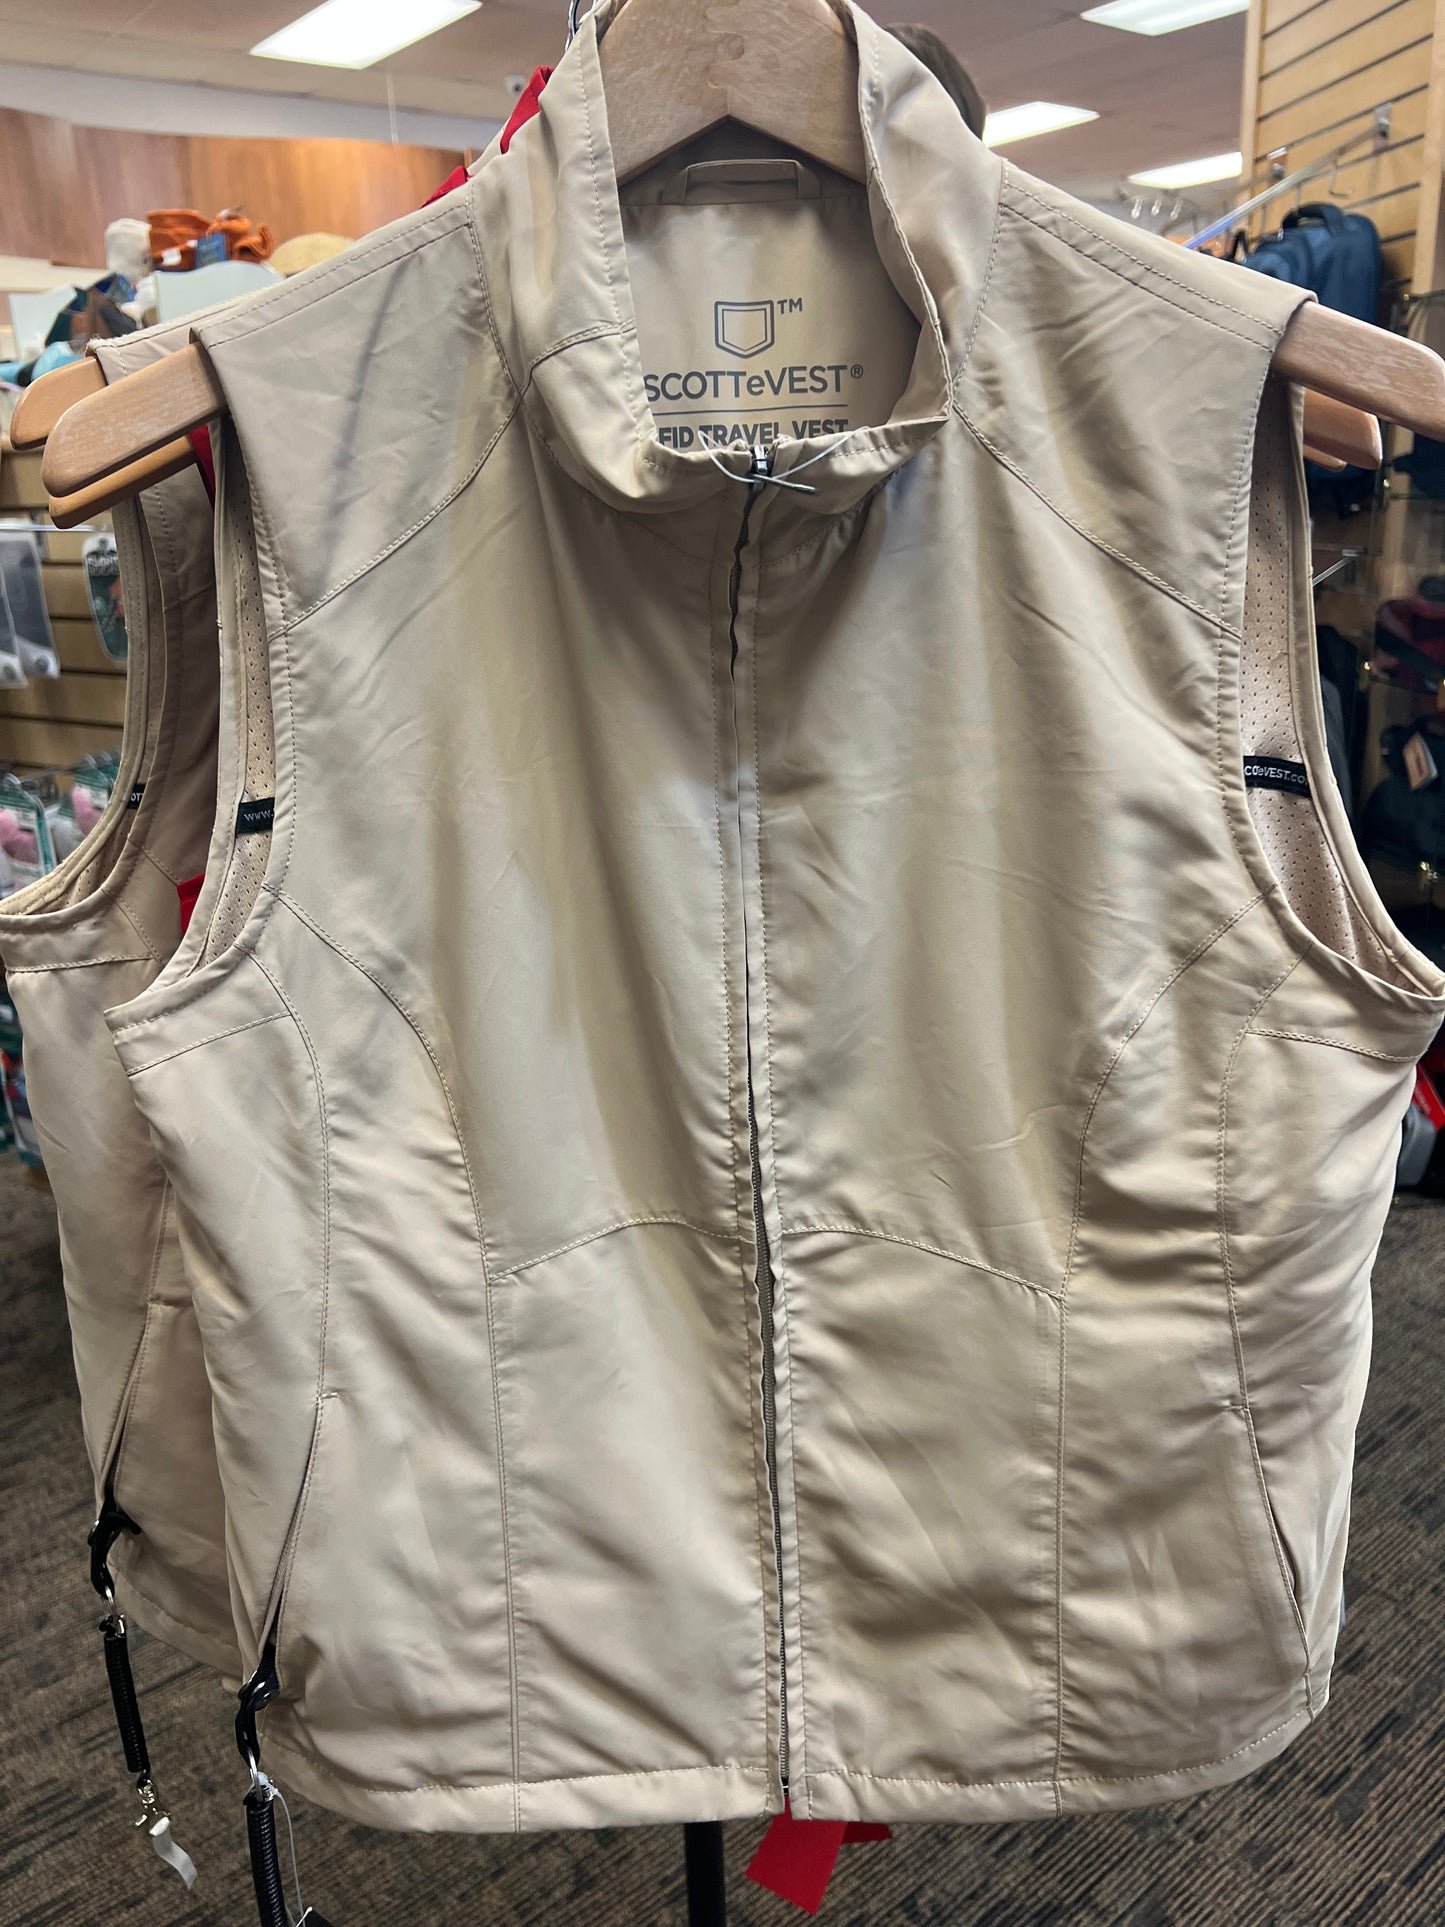 Scott e Vest RFID Water Repellant Travel Vest for Women (in khaki, size medium, last one in stock)